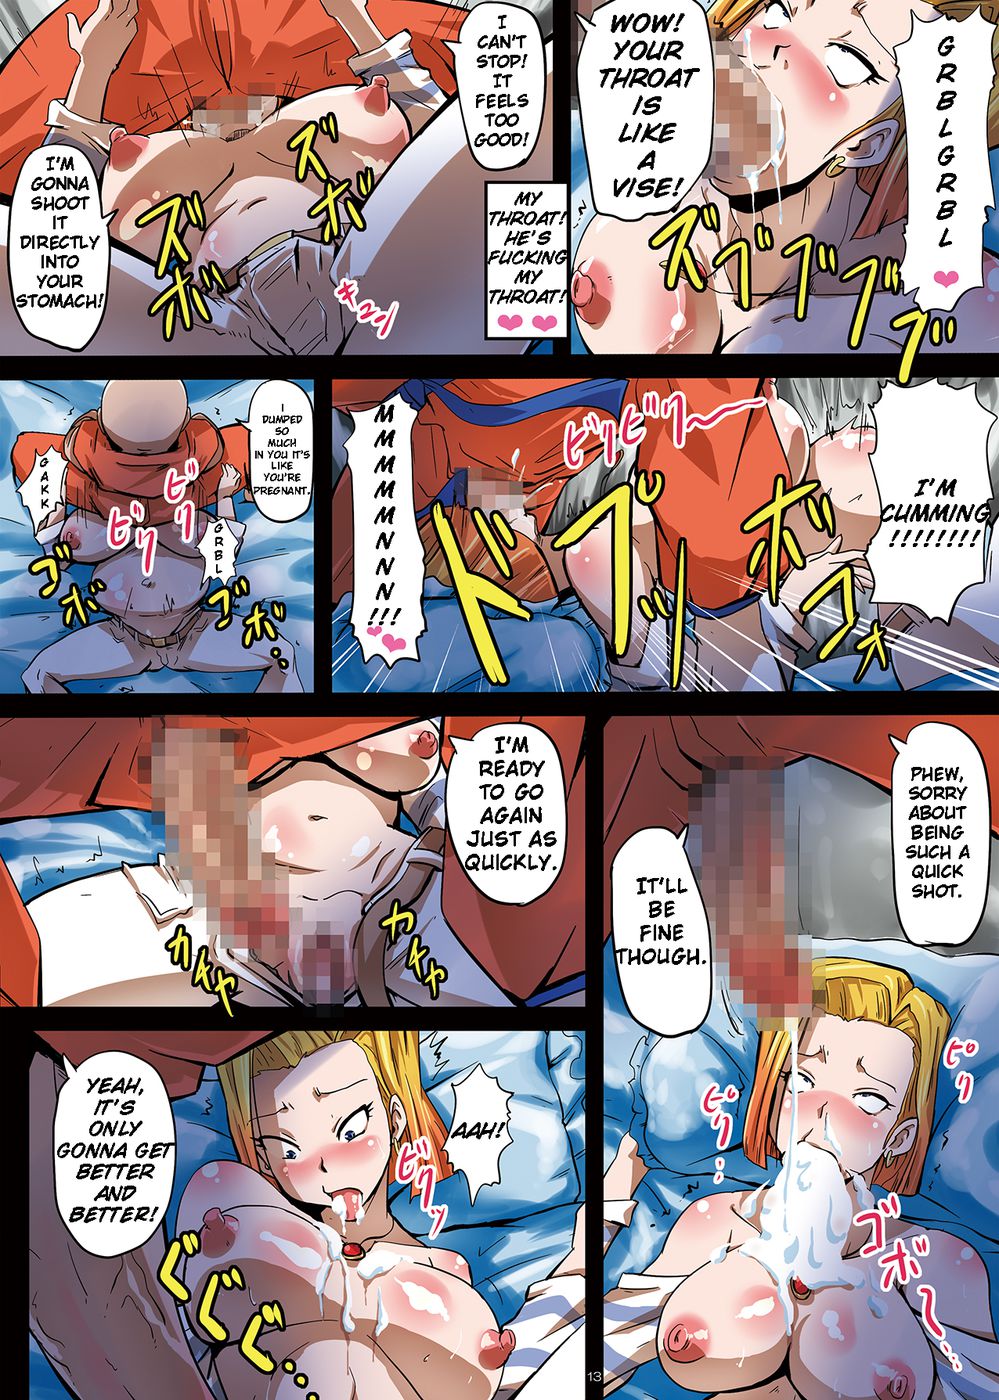 Hentai Manga Comic-The Plan to Subjugate 18 -Bulma and Krillin's Conspiracy to Turn 18 Into a Sex Slave-Read-14